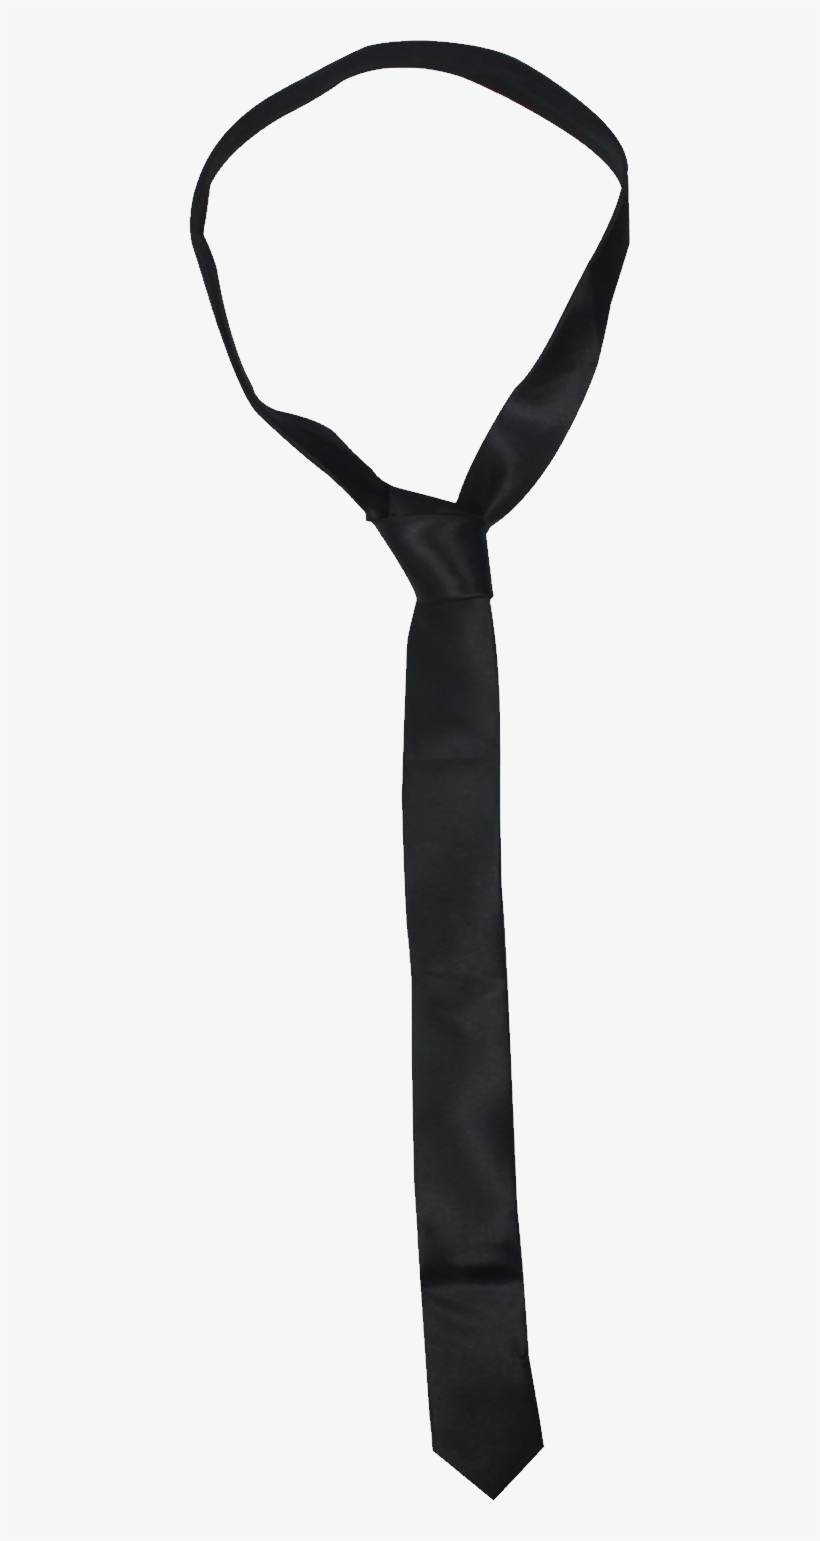 Black Tie Png Image - Black Tie Png, transparent png #81828